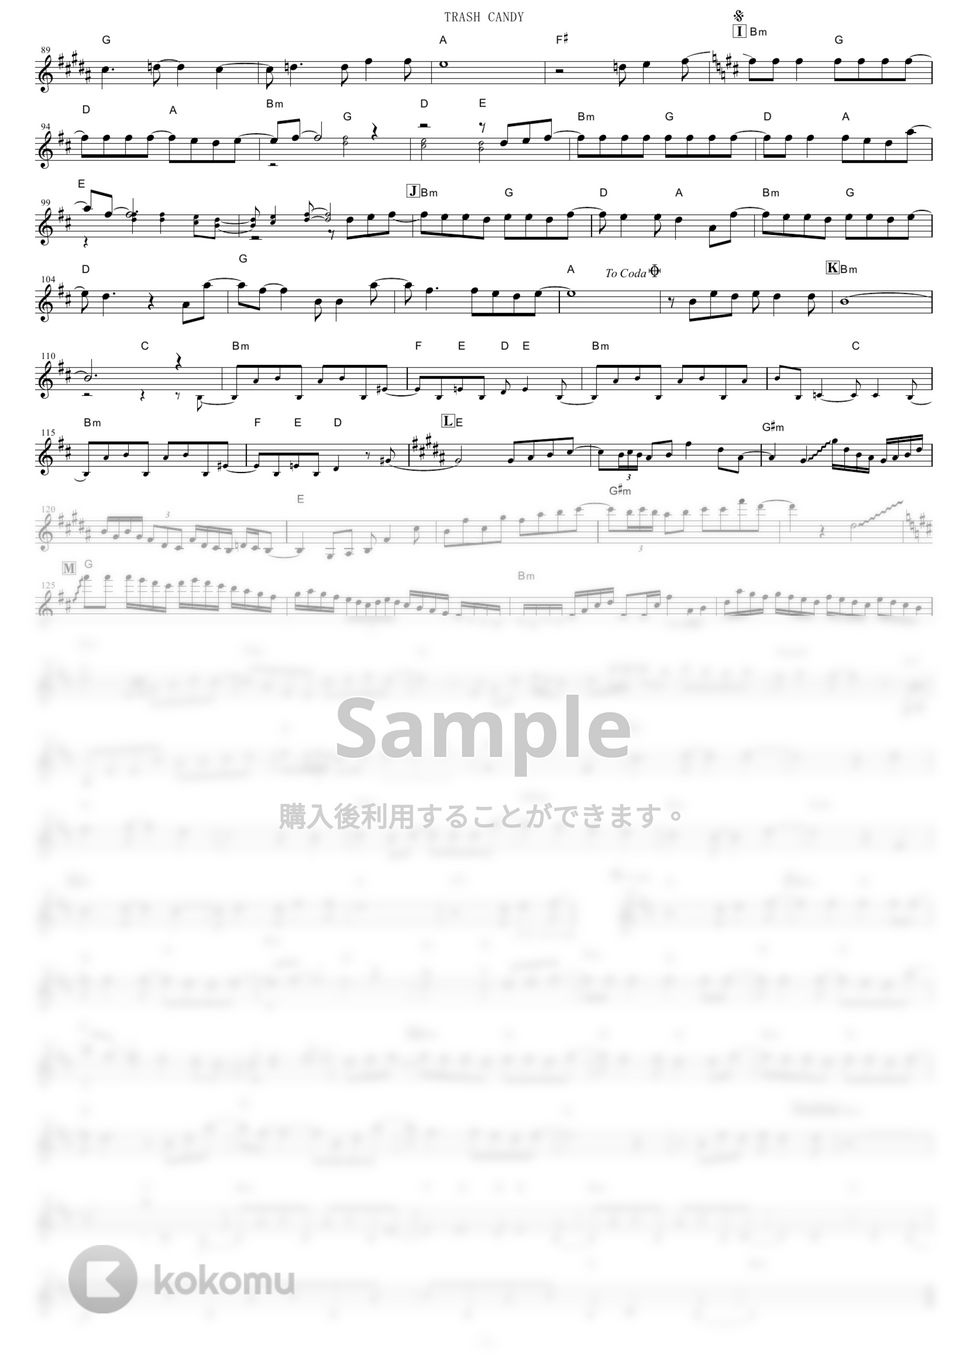 GRANRODEO - TRASH CANDY (『文豪ストレイドッグス』 / in Eb) by muta-sax